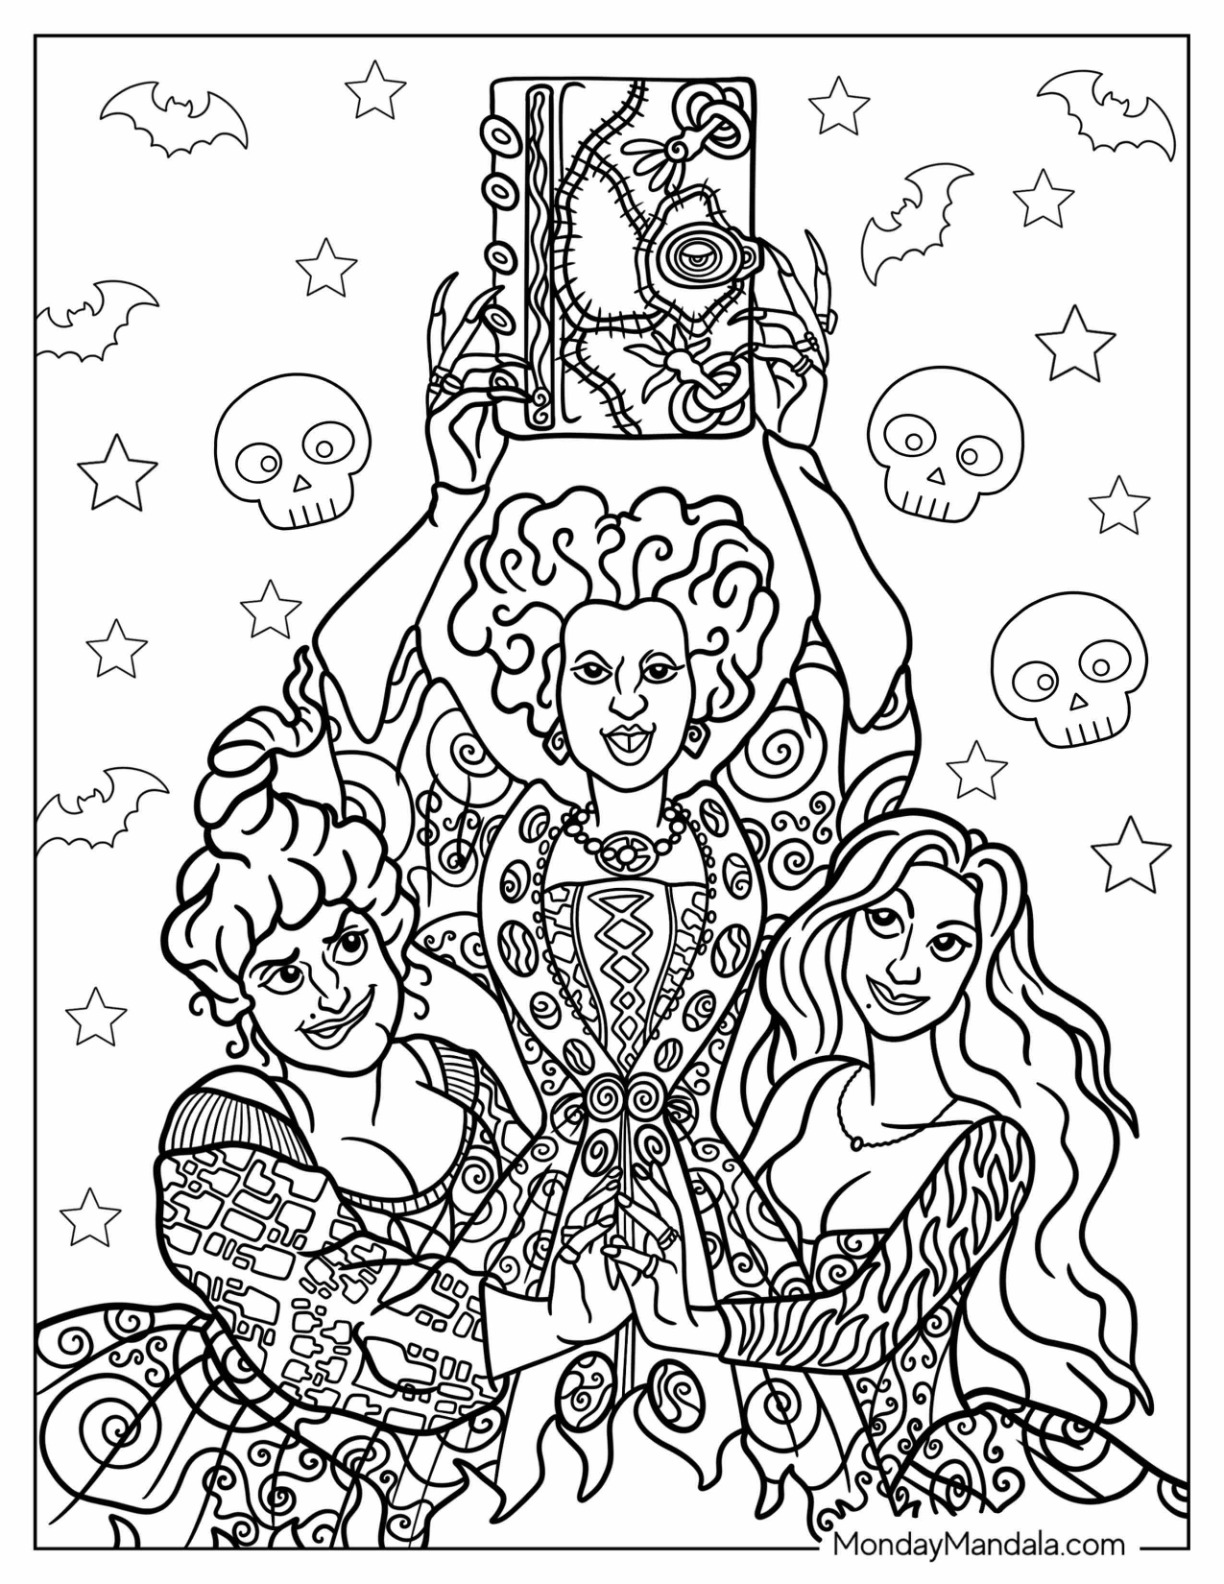 Hocus pocus coloring pages free pdf printables